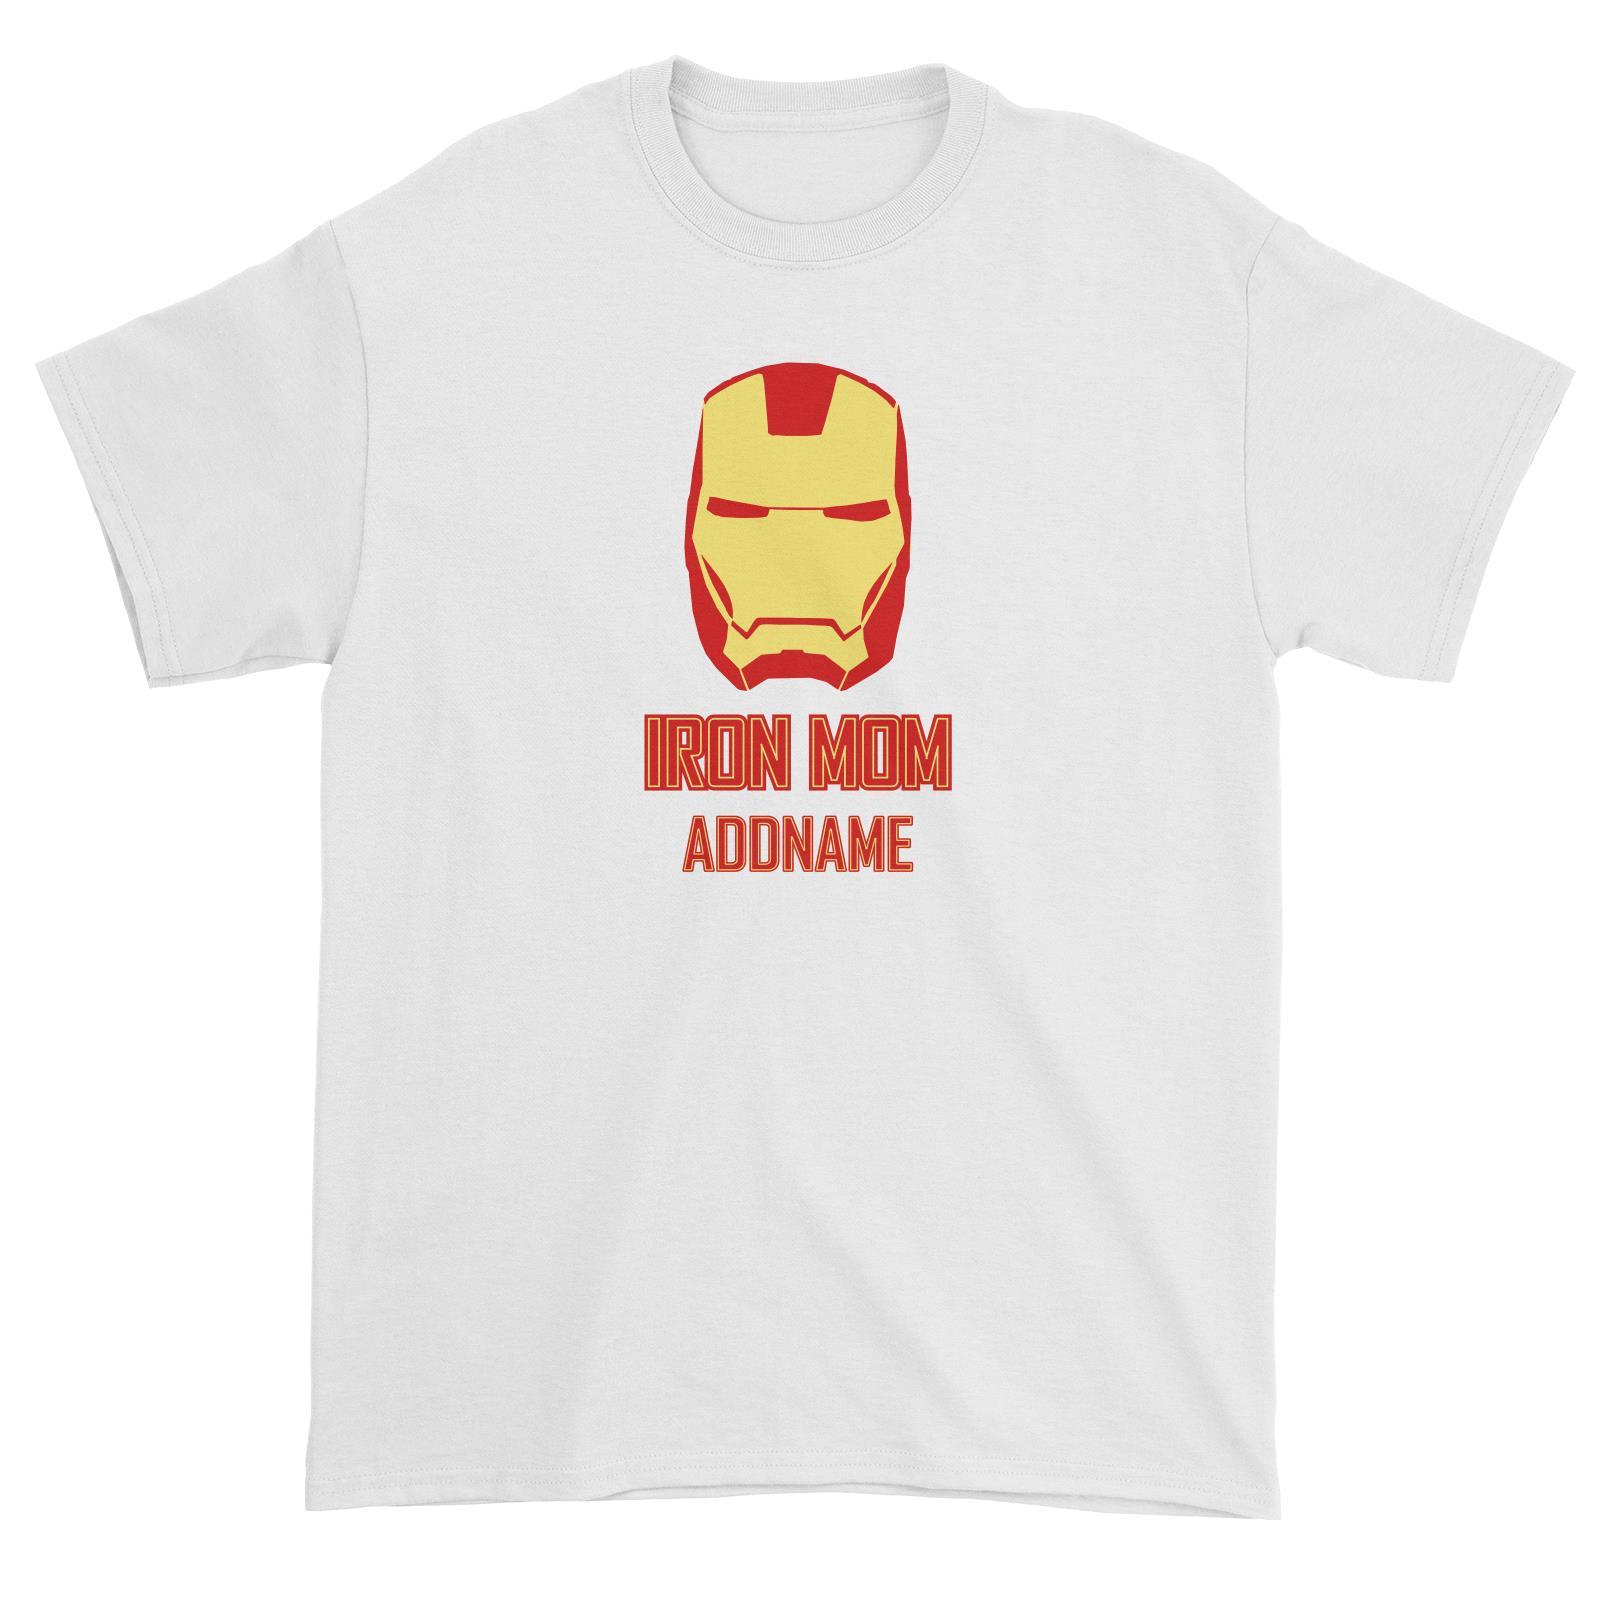 Superhero Iron Mom Addname Unisex T-Shirt  Matching Family Personalizable Designs